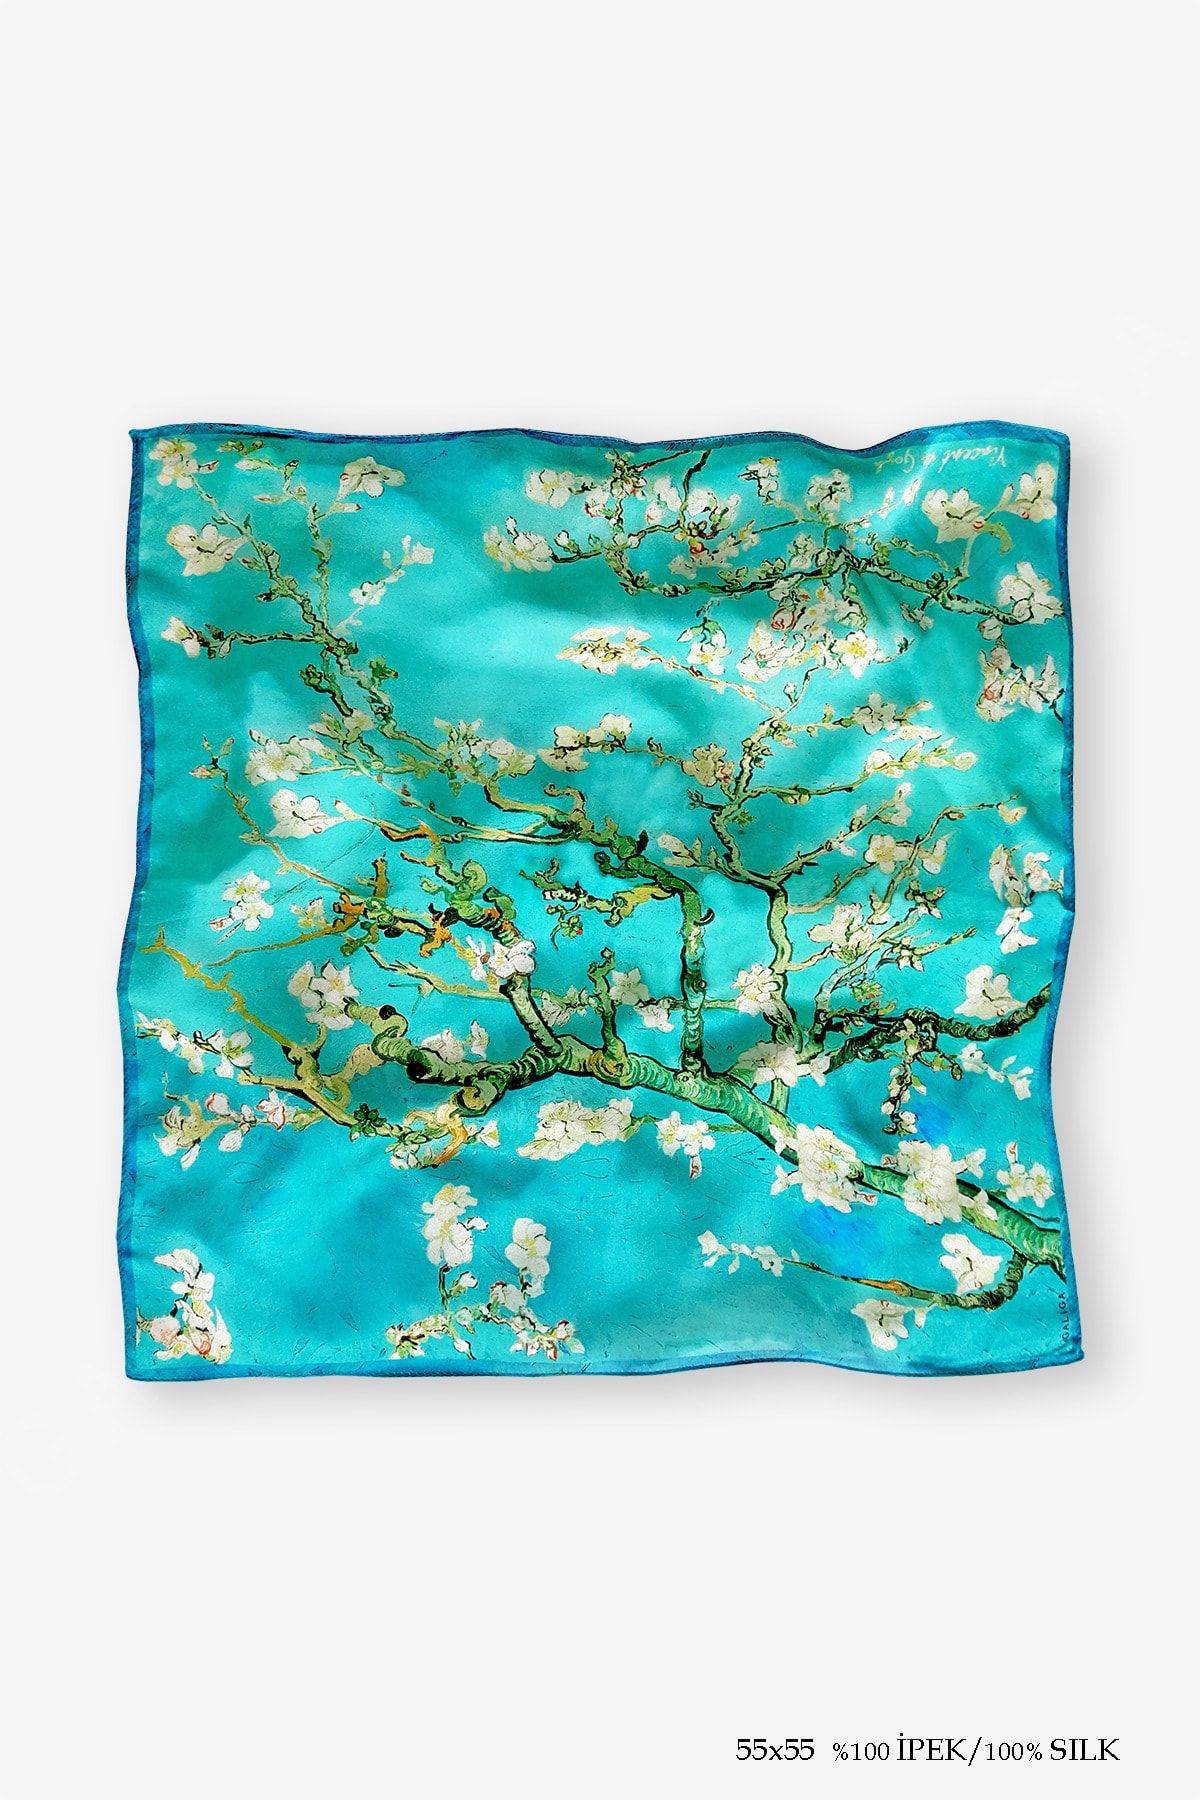 Galiga Van Gogh Almond %100 Ipek Fular 55x55cm "art On Silk"